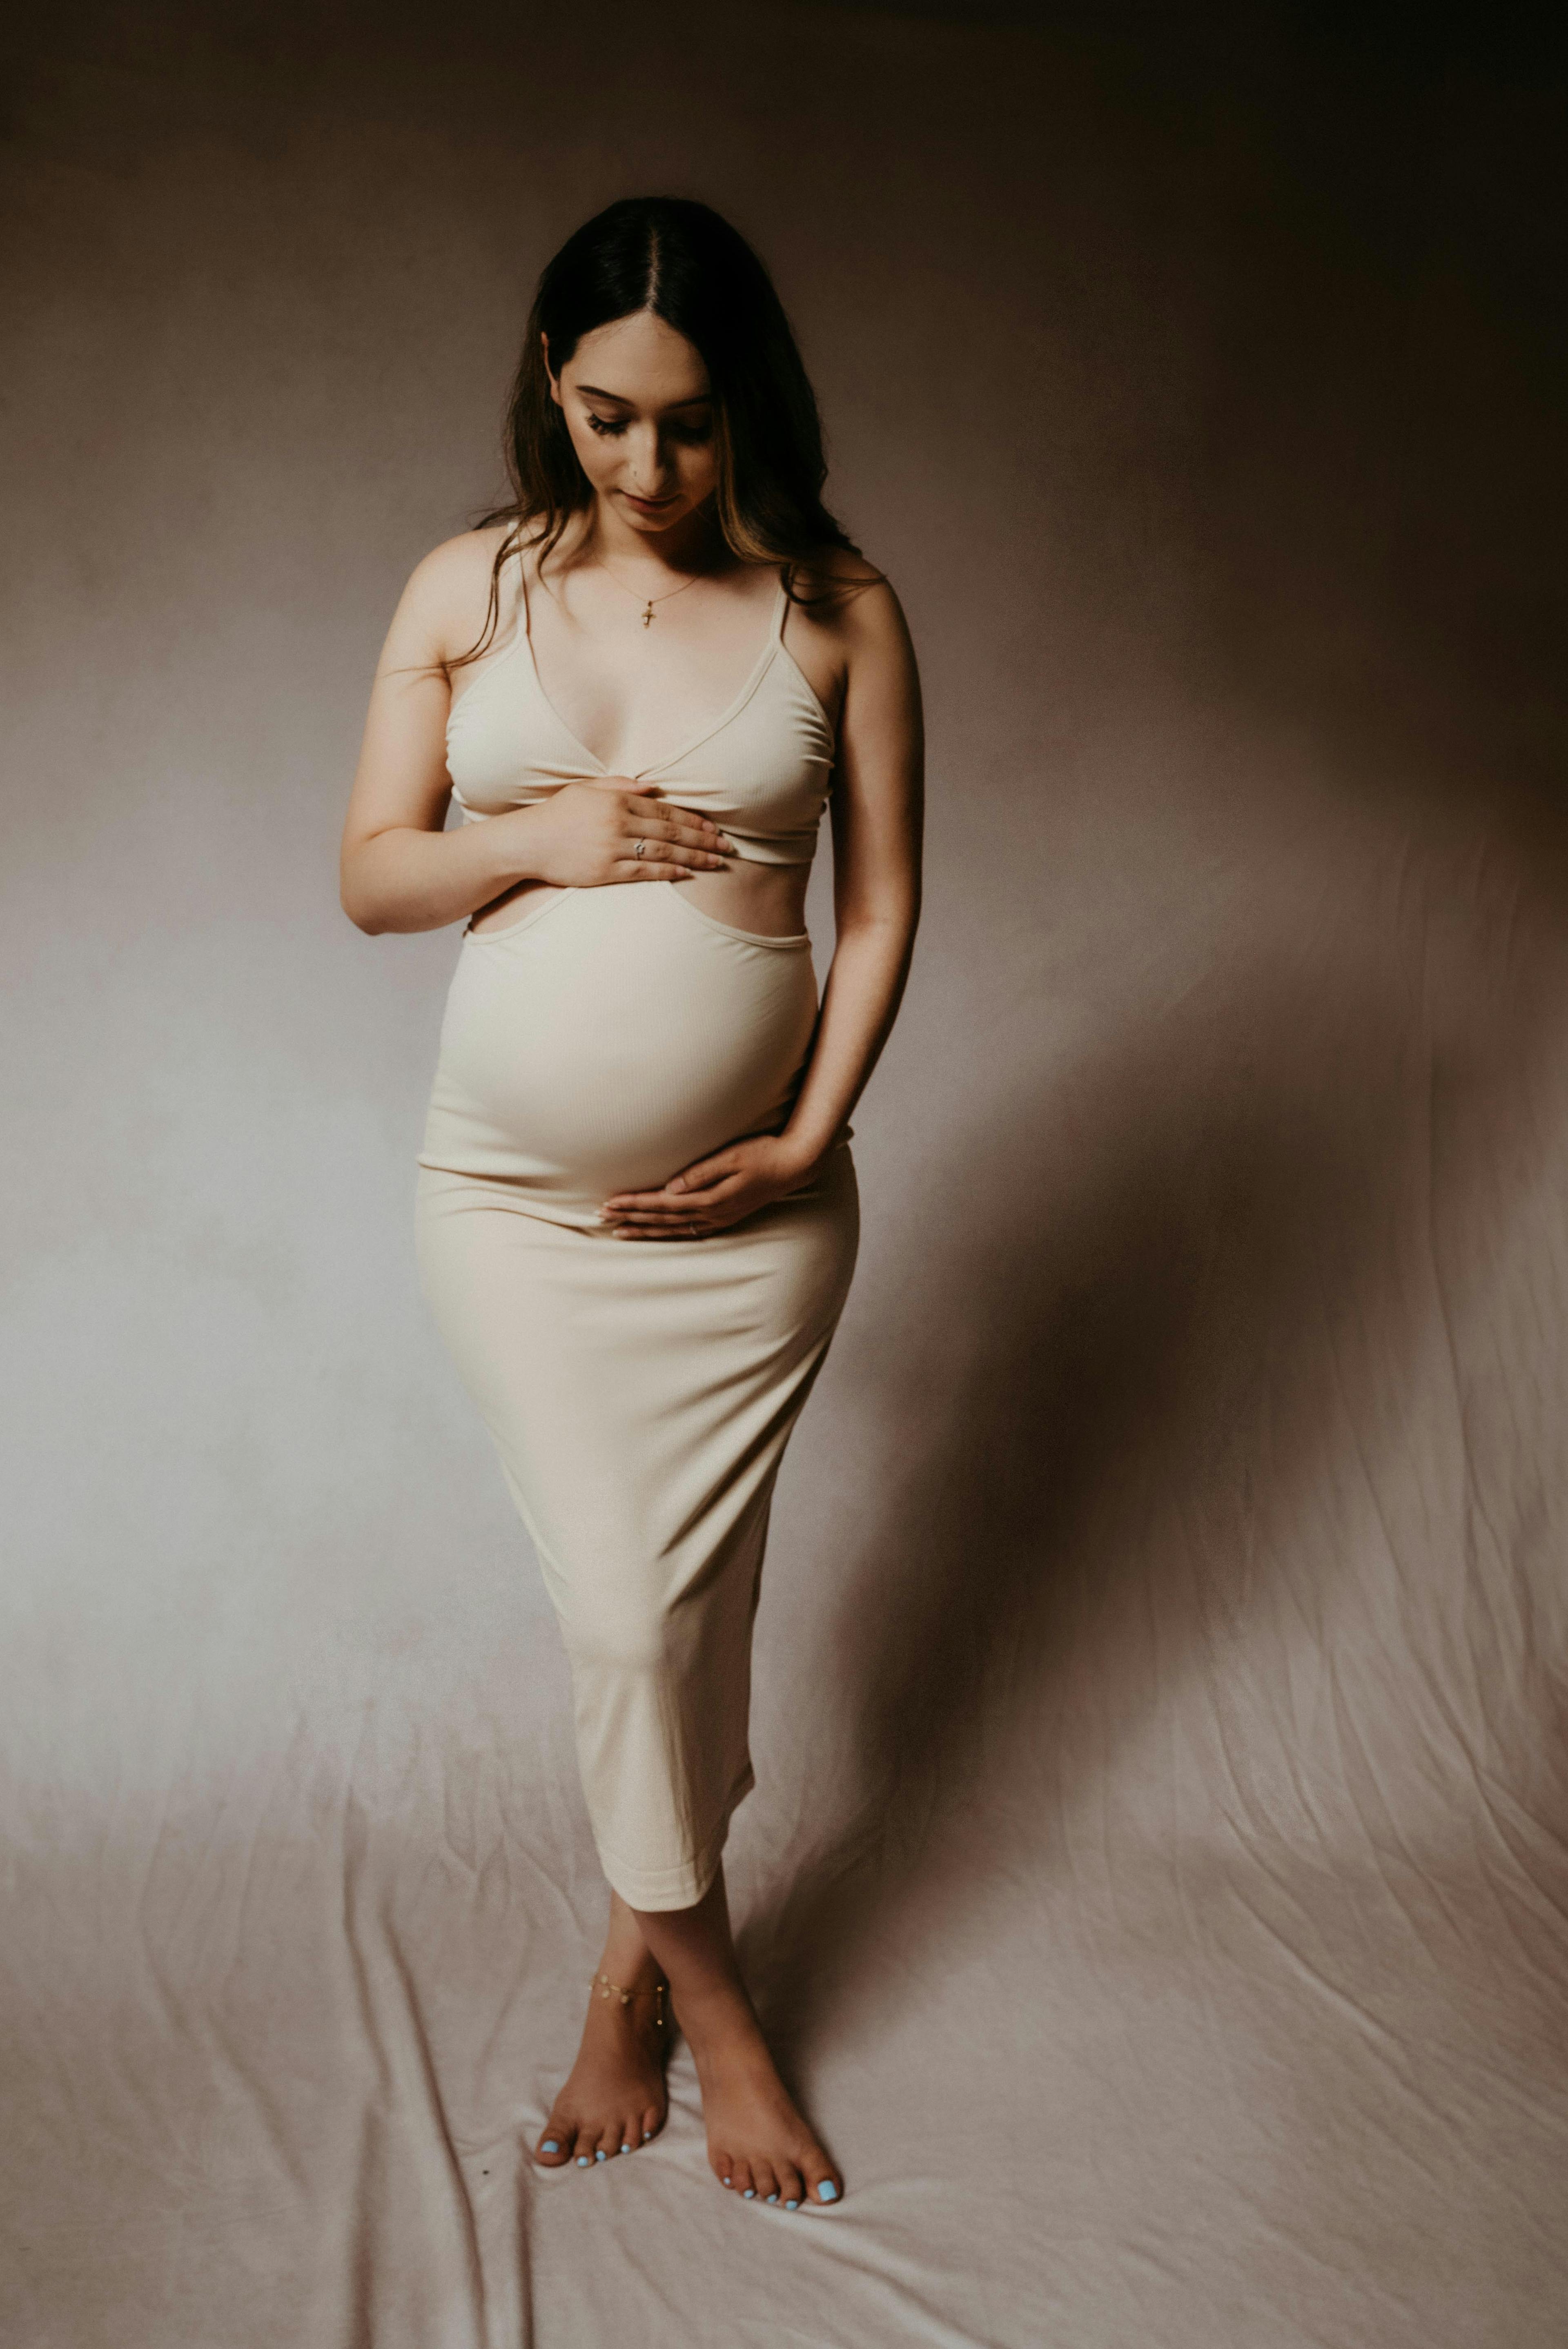 Maternity portrait photography